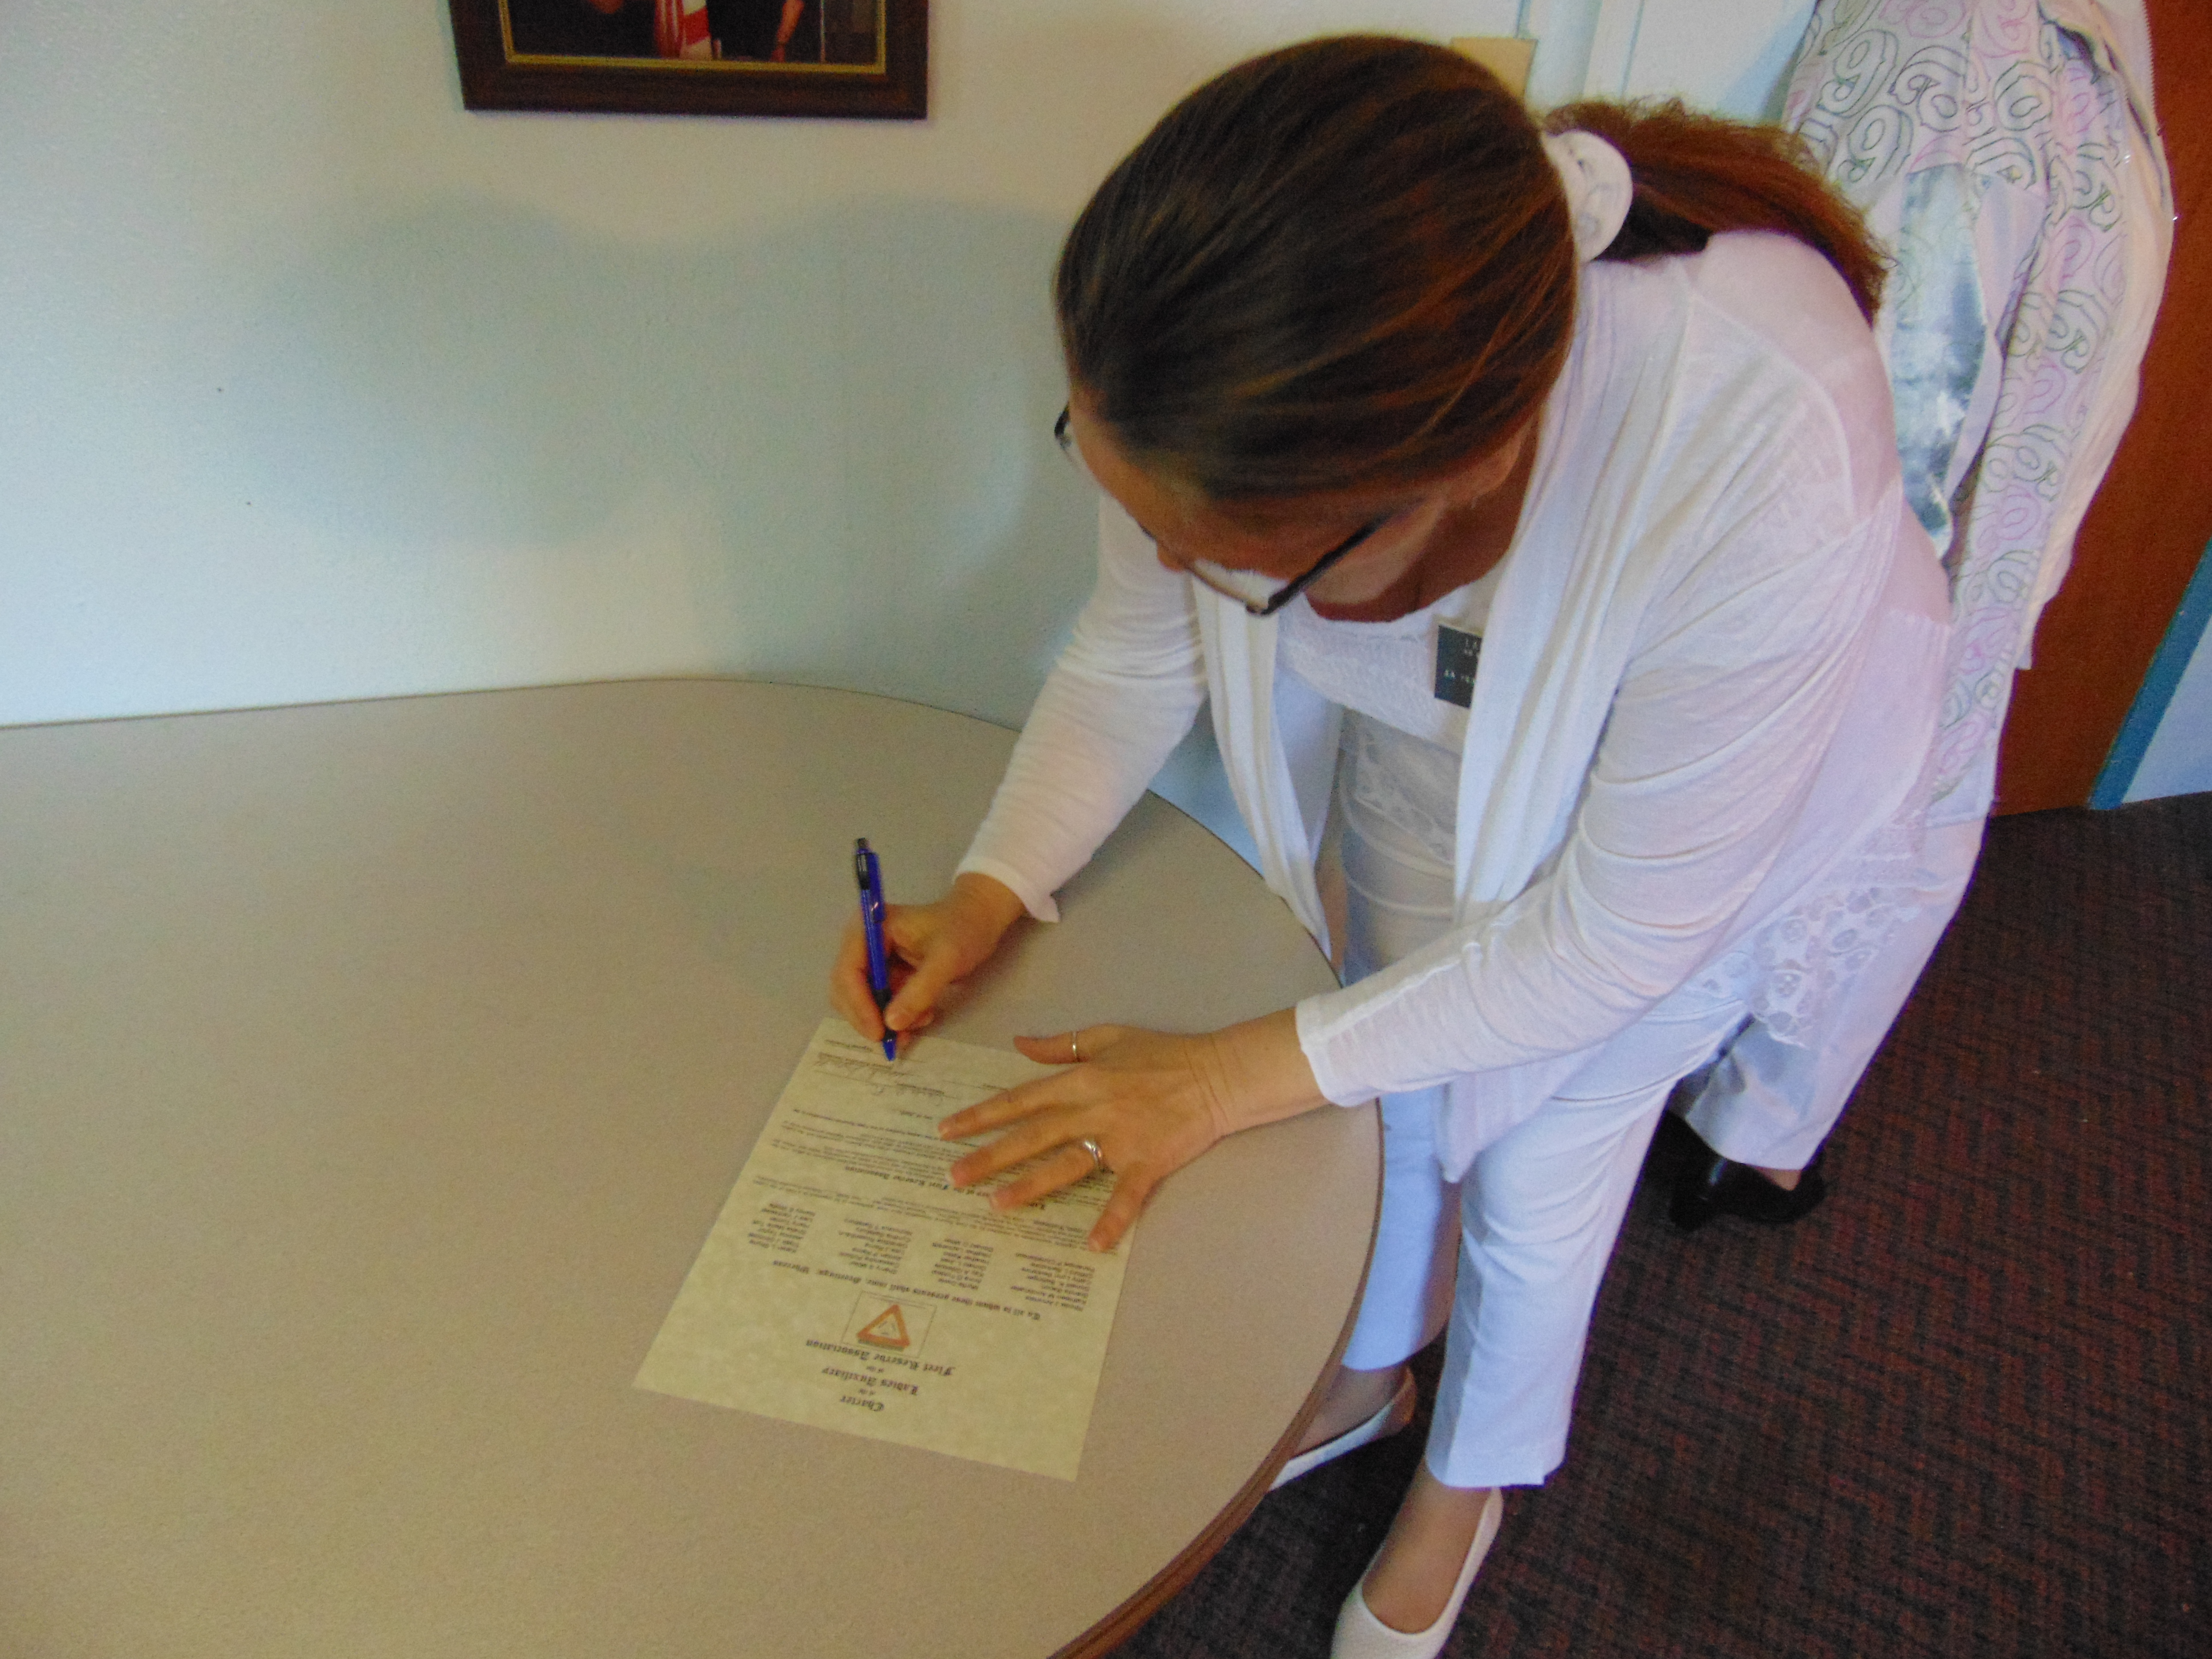 RPNW Lauren Wynn signs the Unit Charter